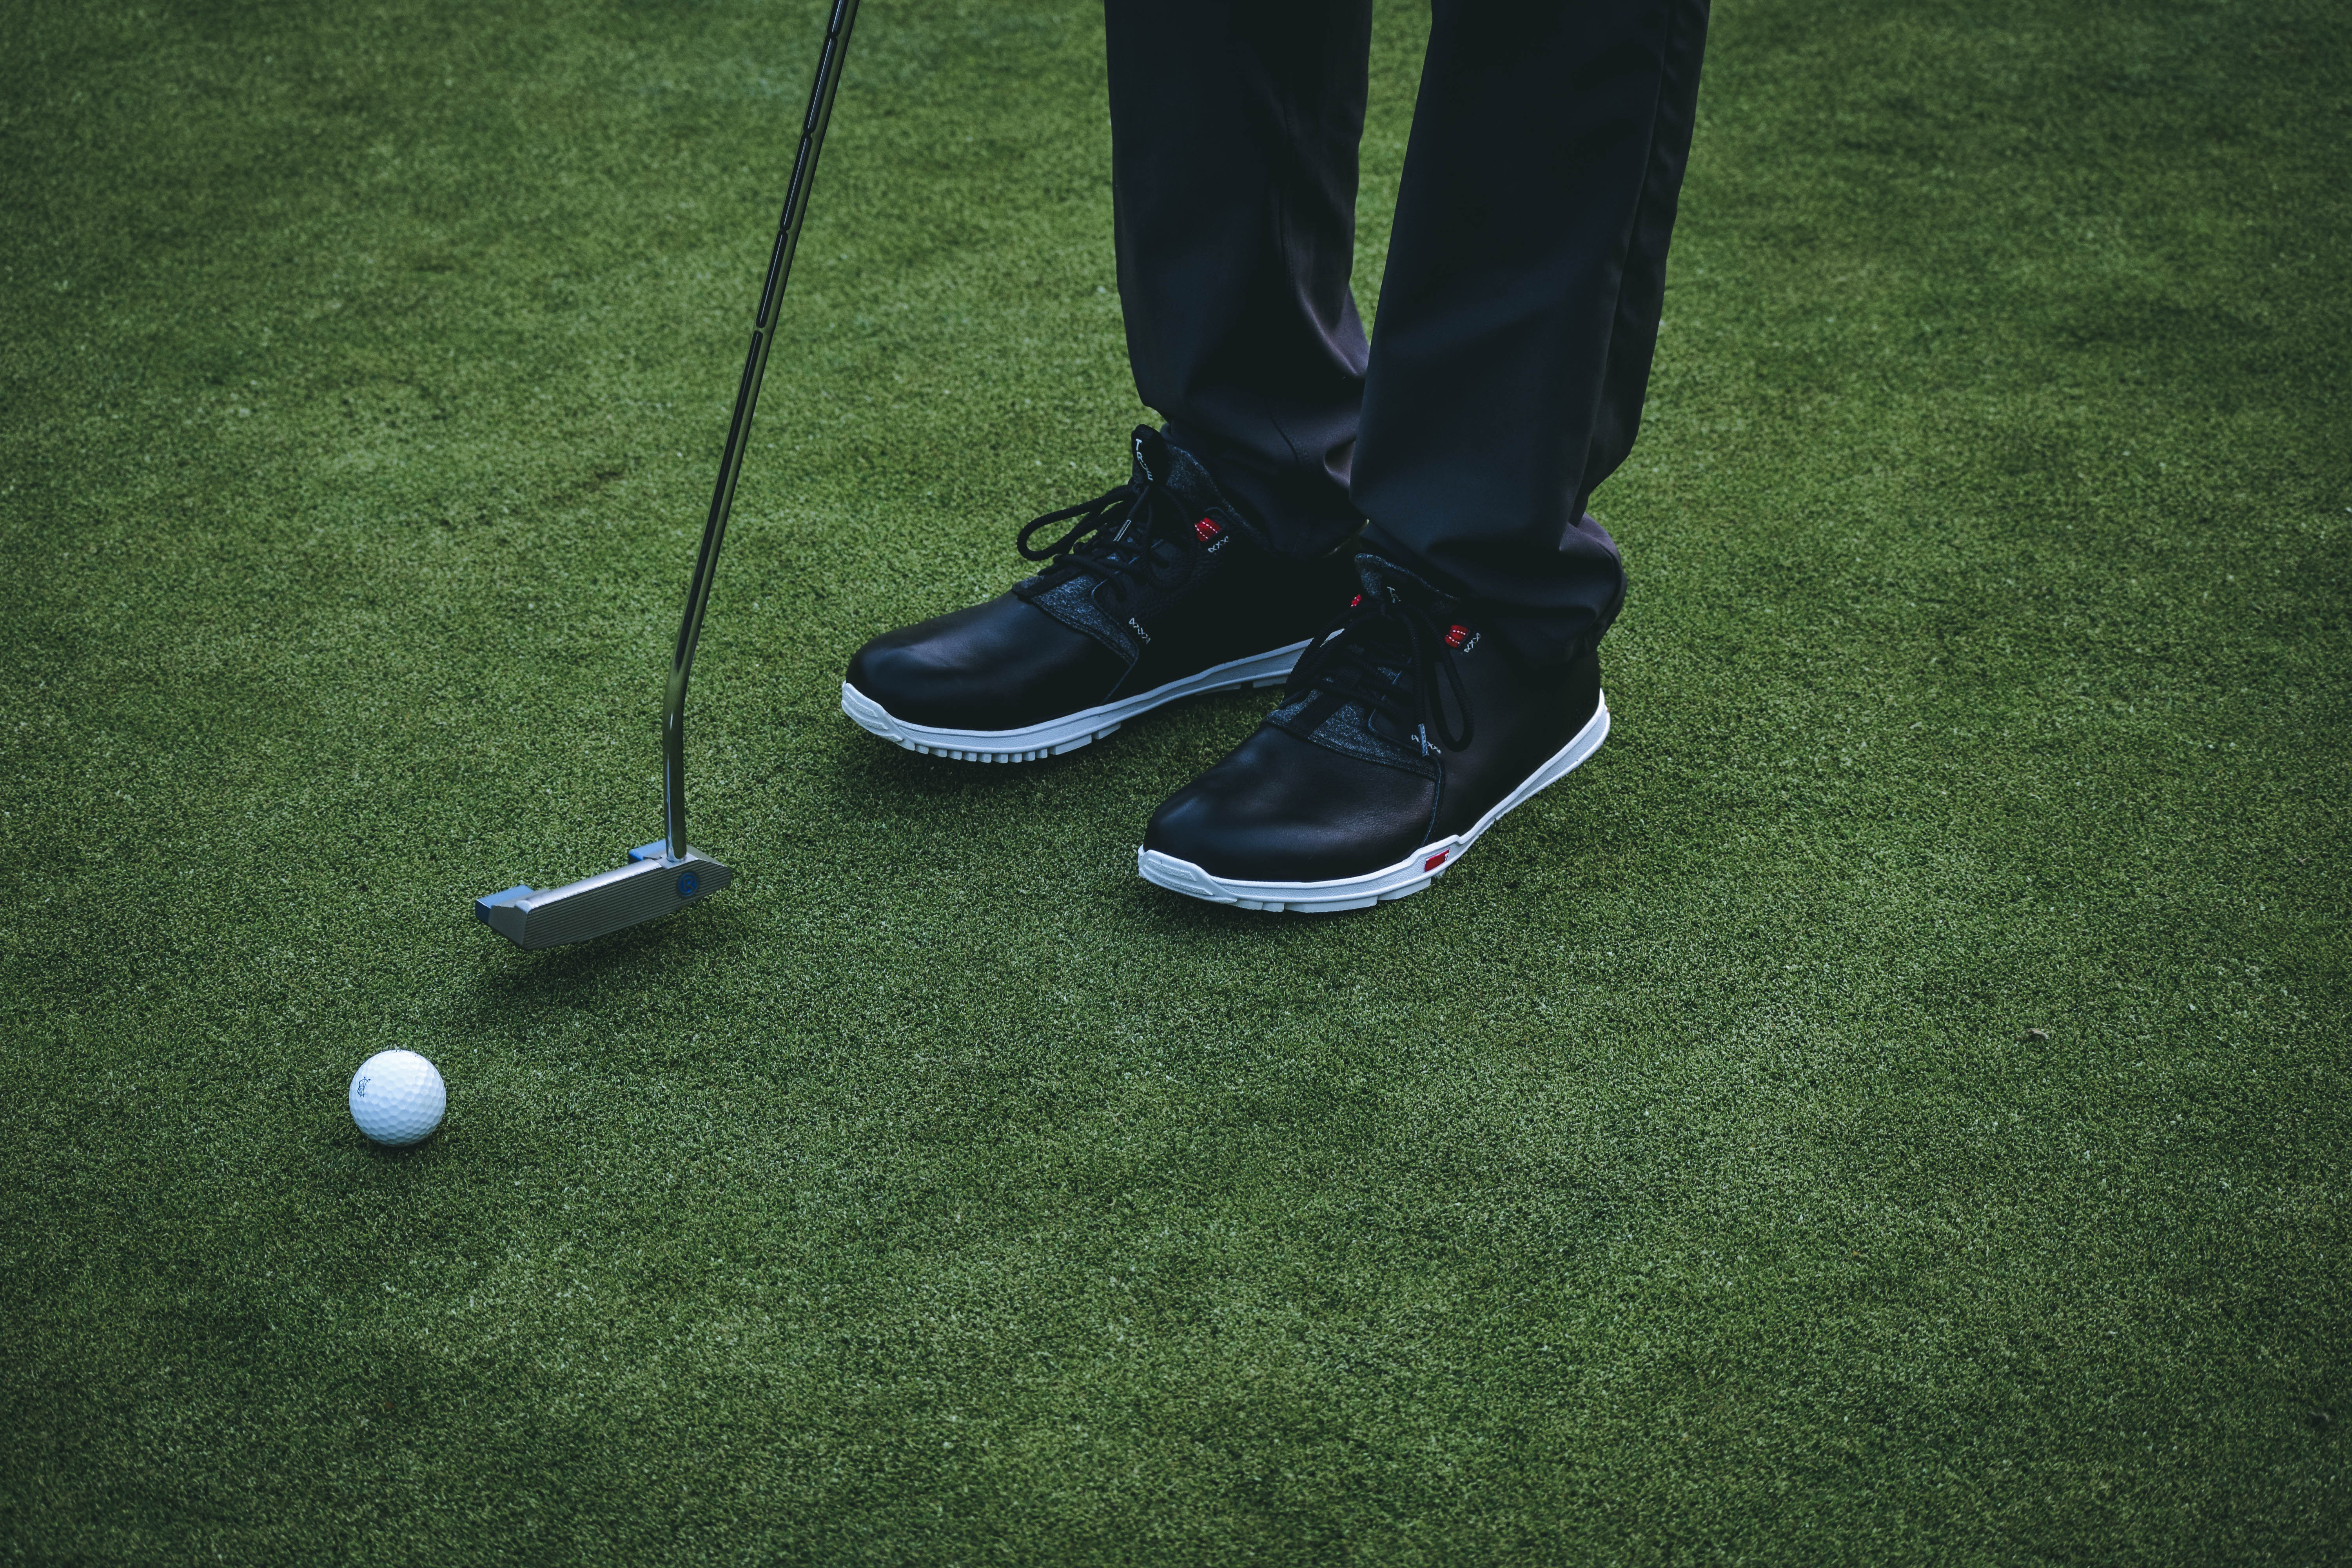 True Linkswear goes back to its spikeless roots – GolfWRX